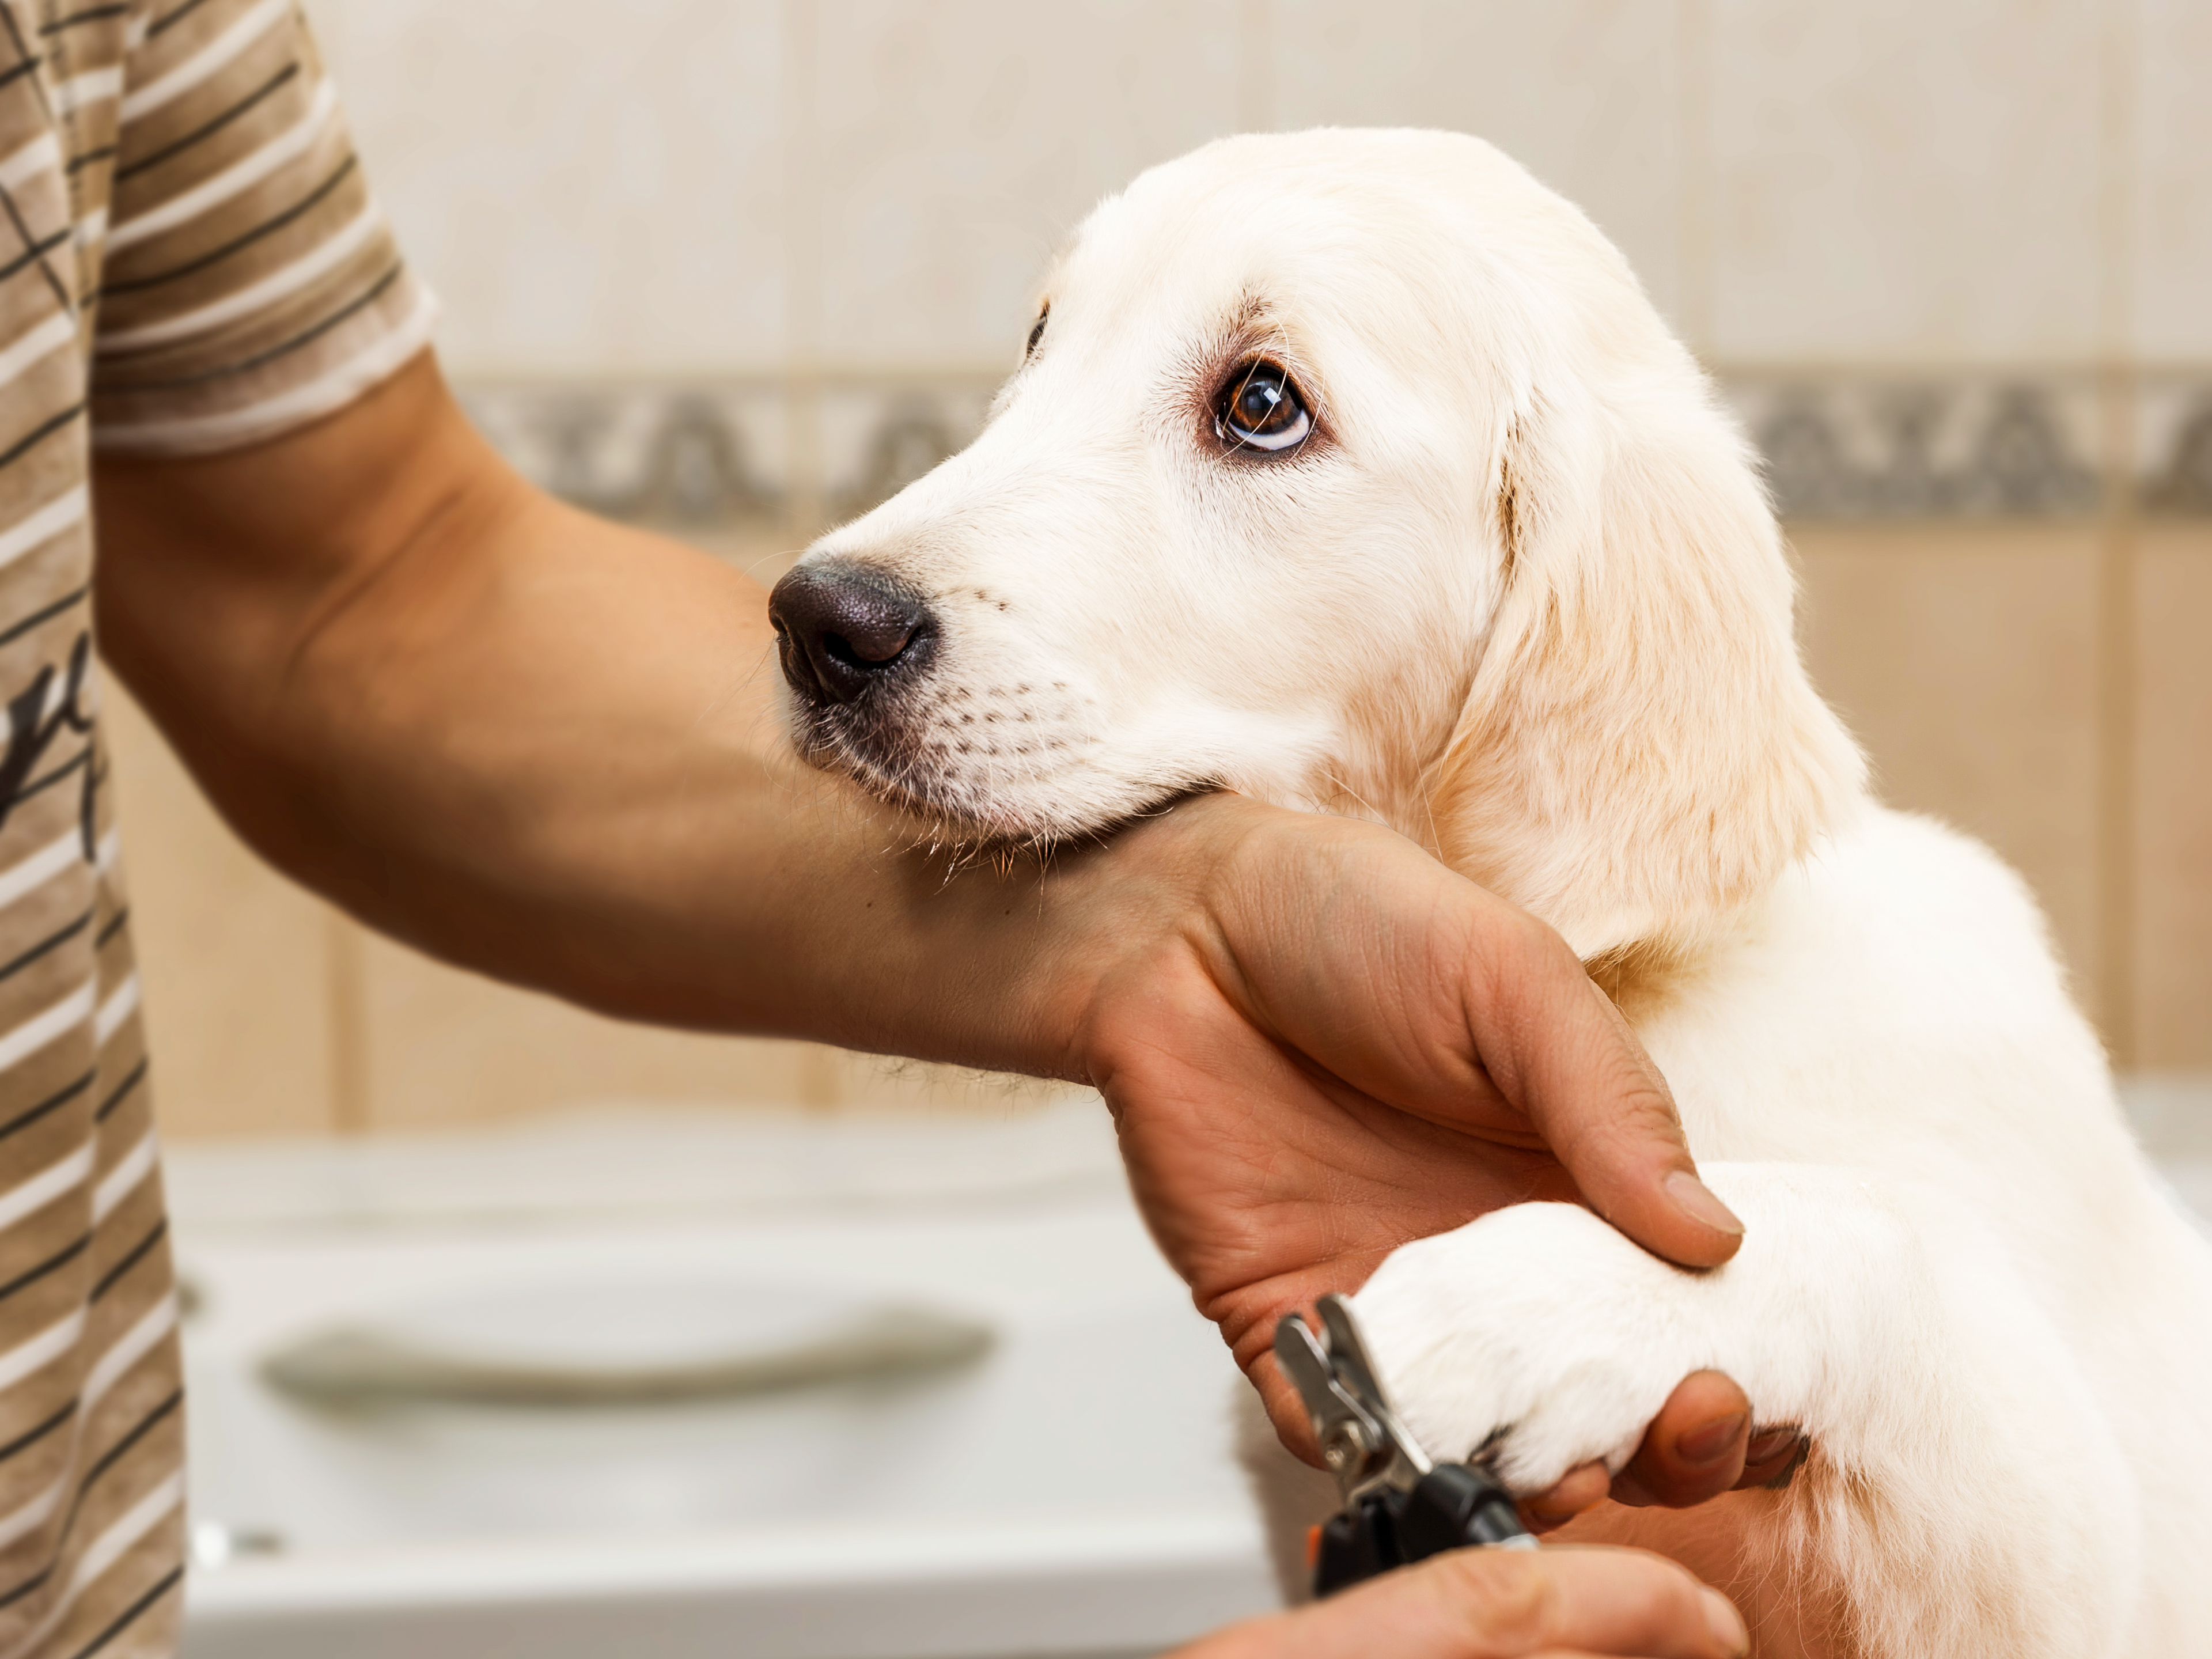 Golden Retriever puppy having their nails clipped in a bathroom